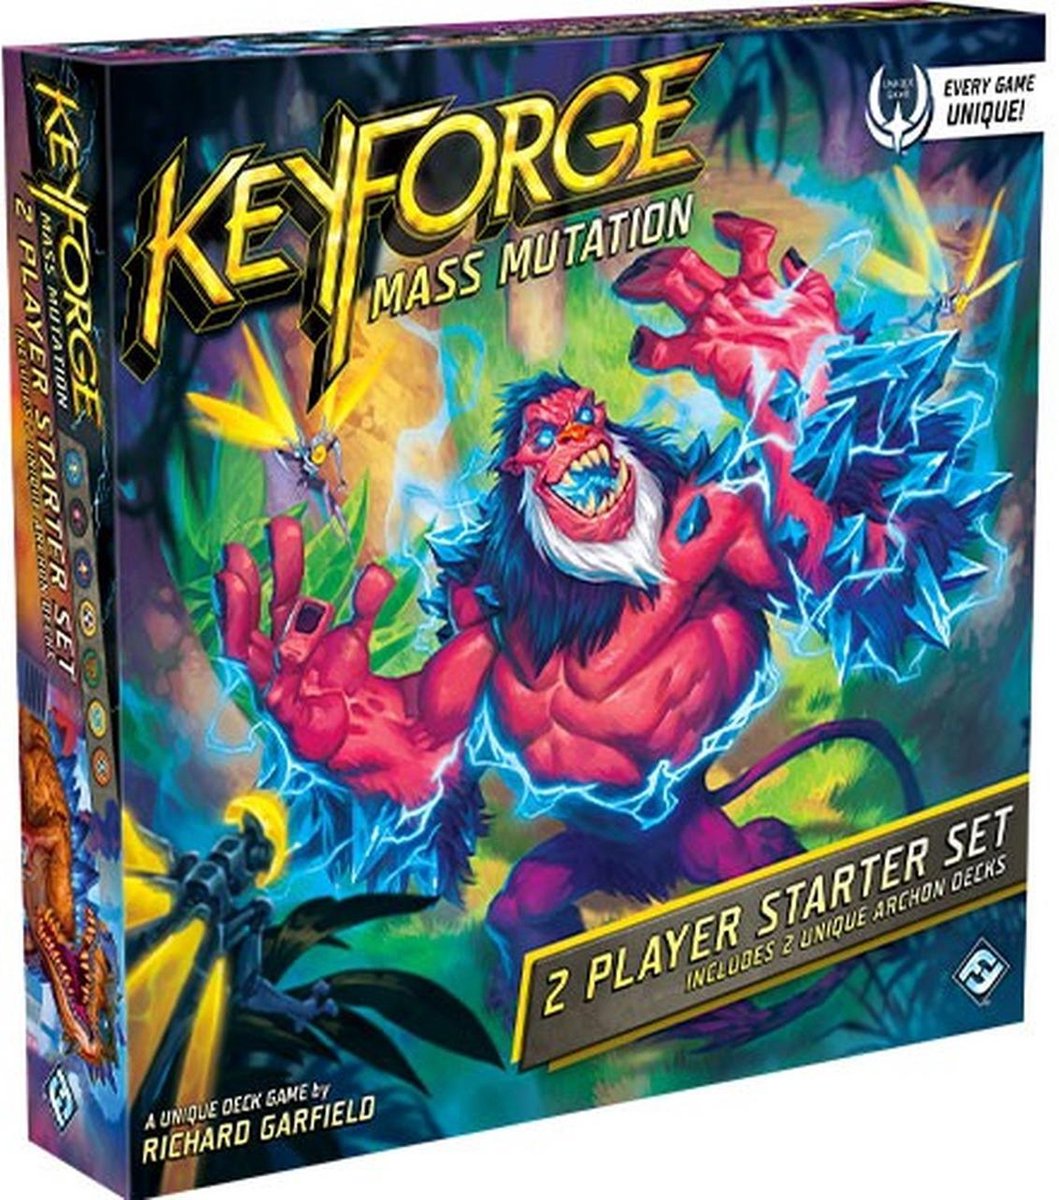 KeyForge Mass Mutation (2 player starter set)